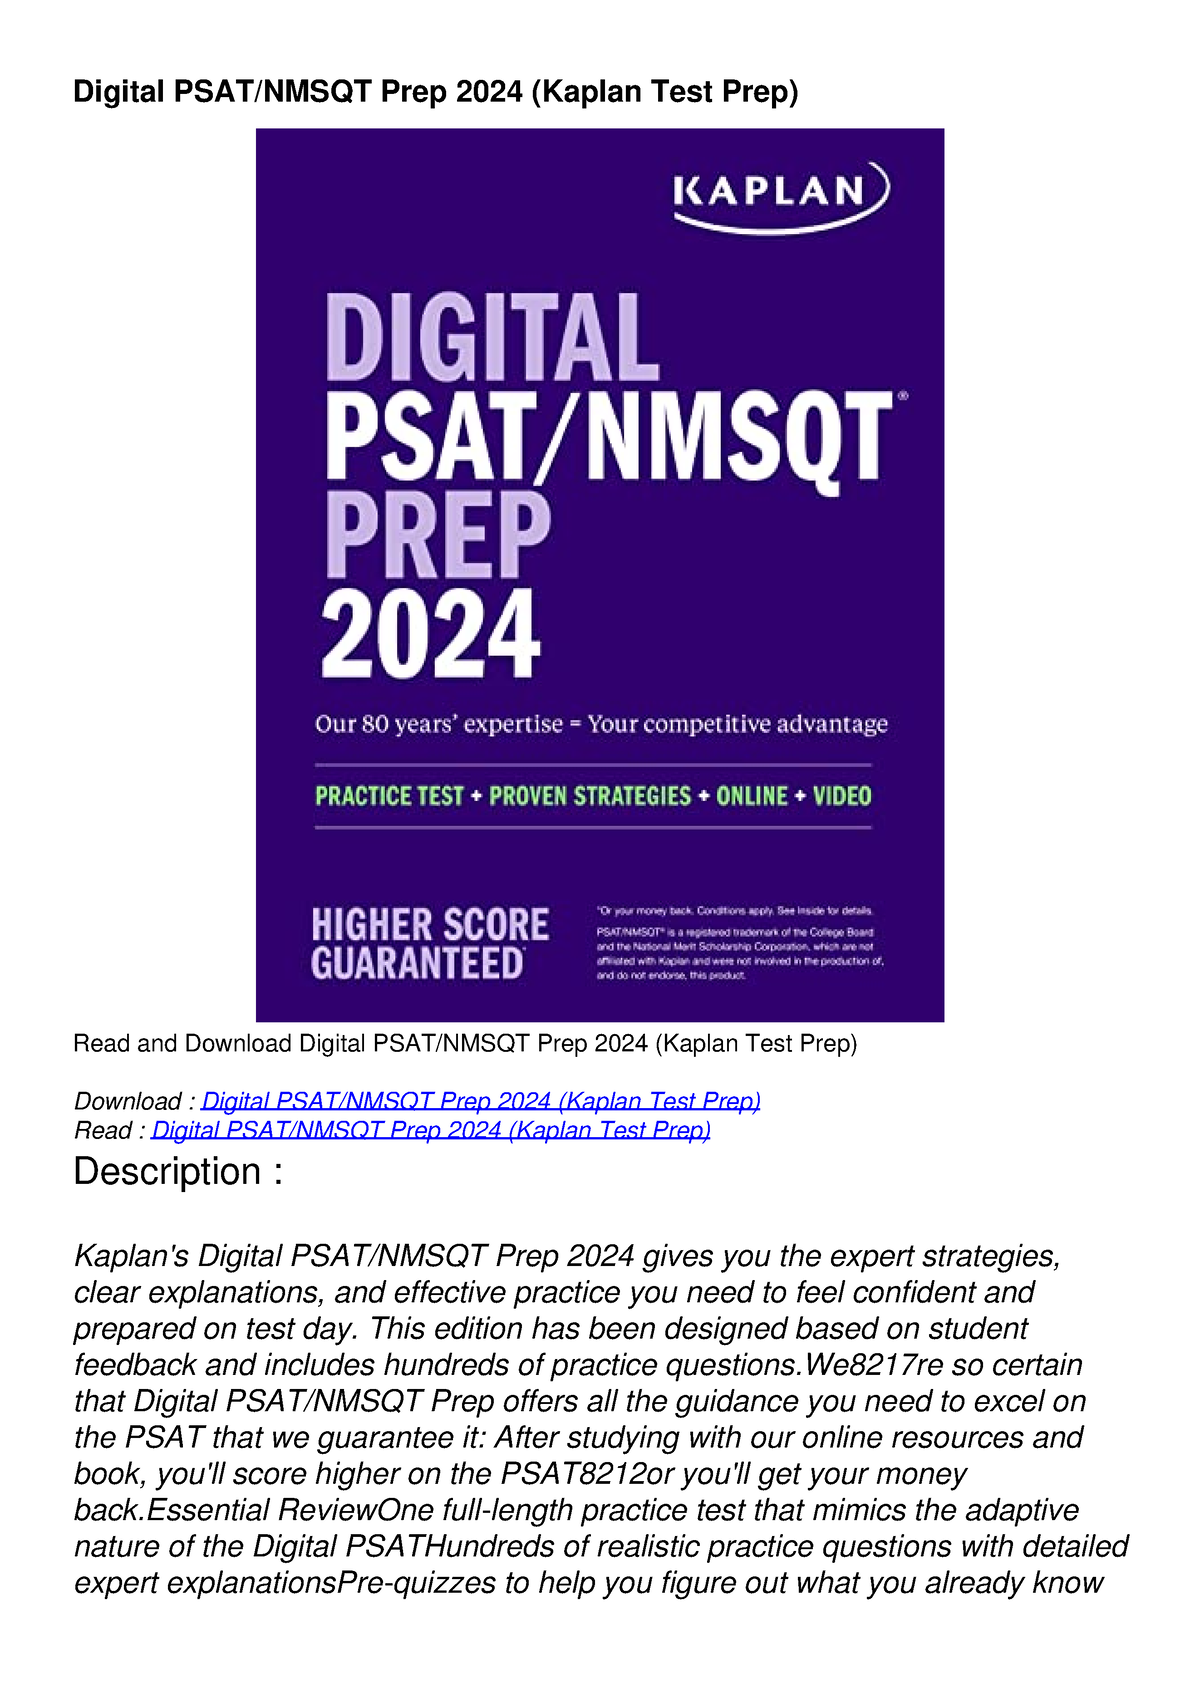 [PDF] DOWNLOAD Digital PSAT/NMSQT Prep 2024 (Kaplan Test Prep